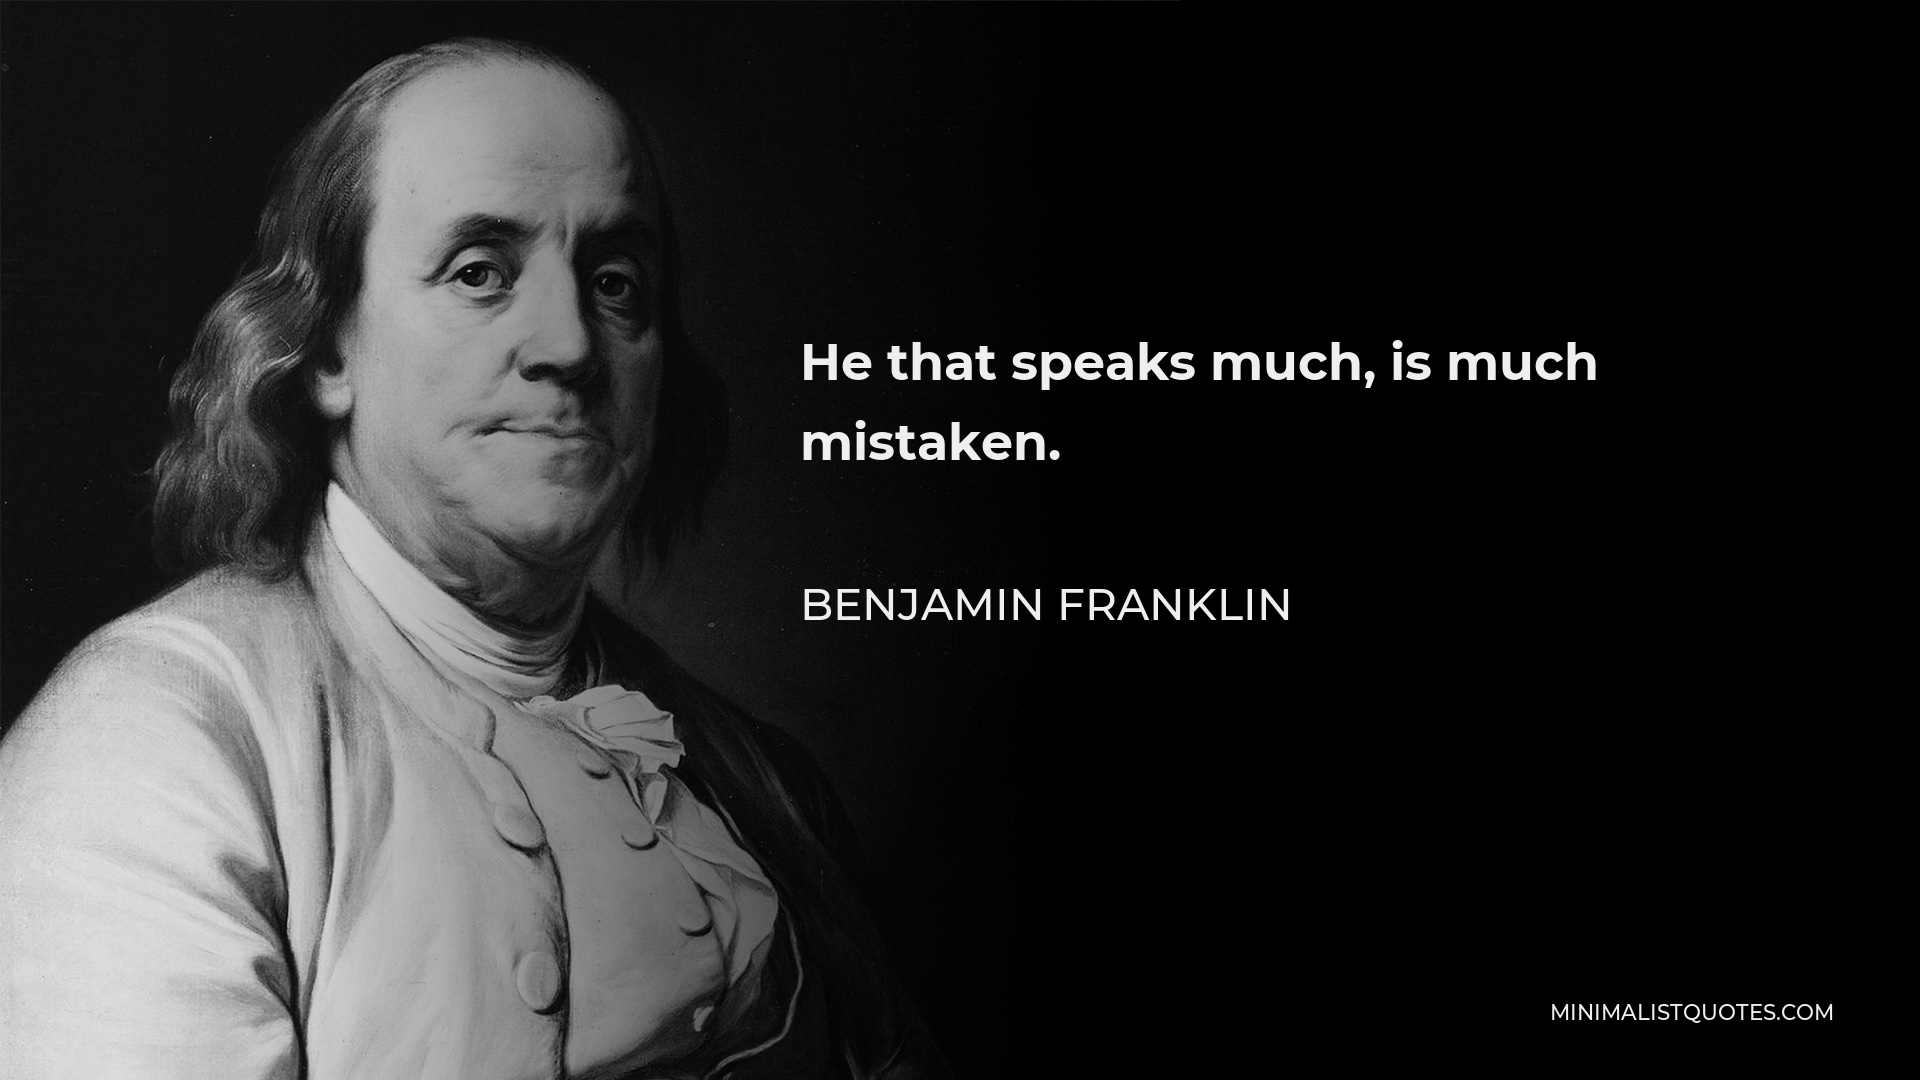 Benjamin Franklin Quote - He that speaks much, is much mistaken.